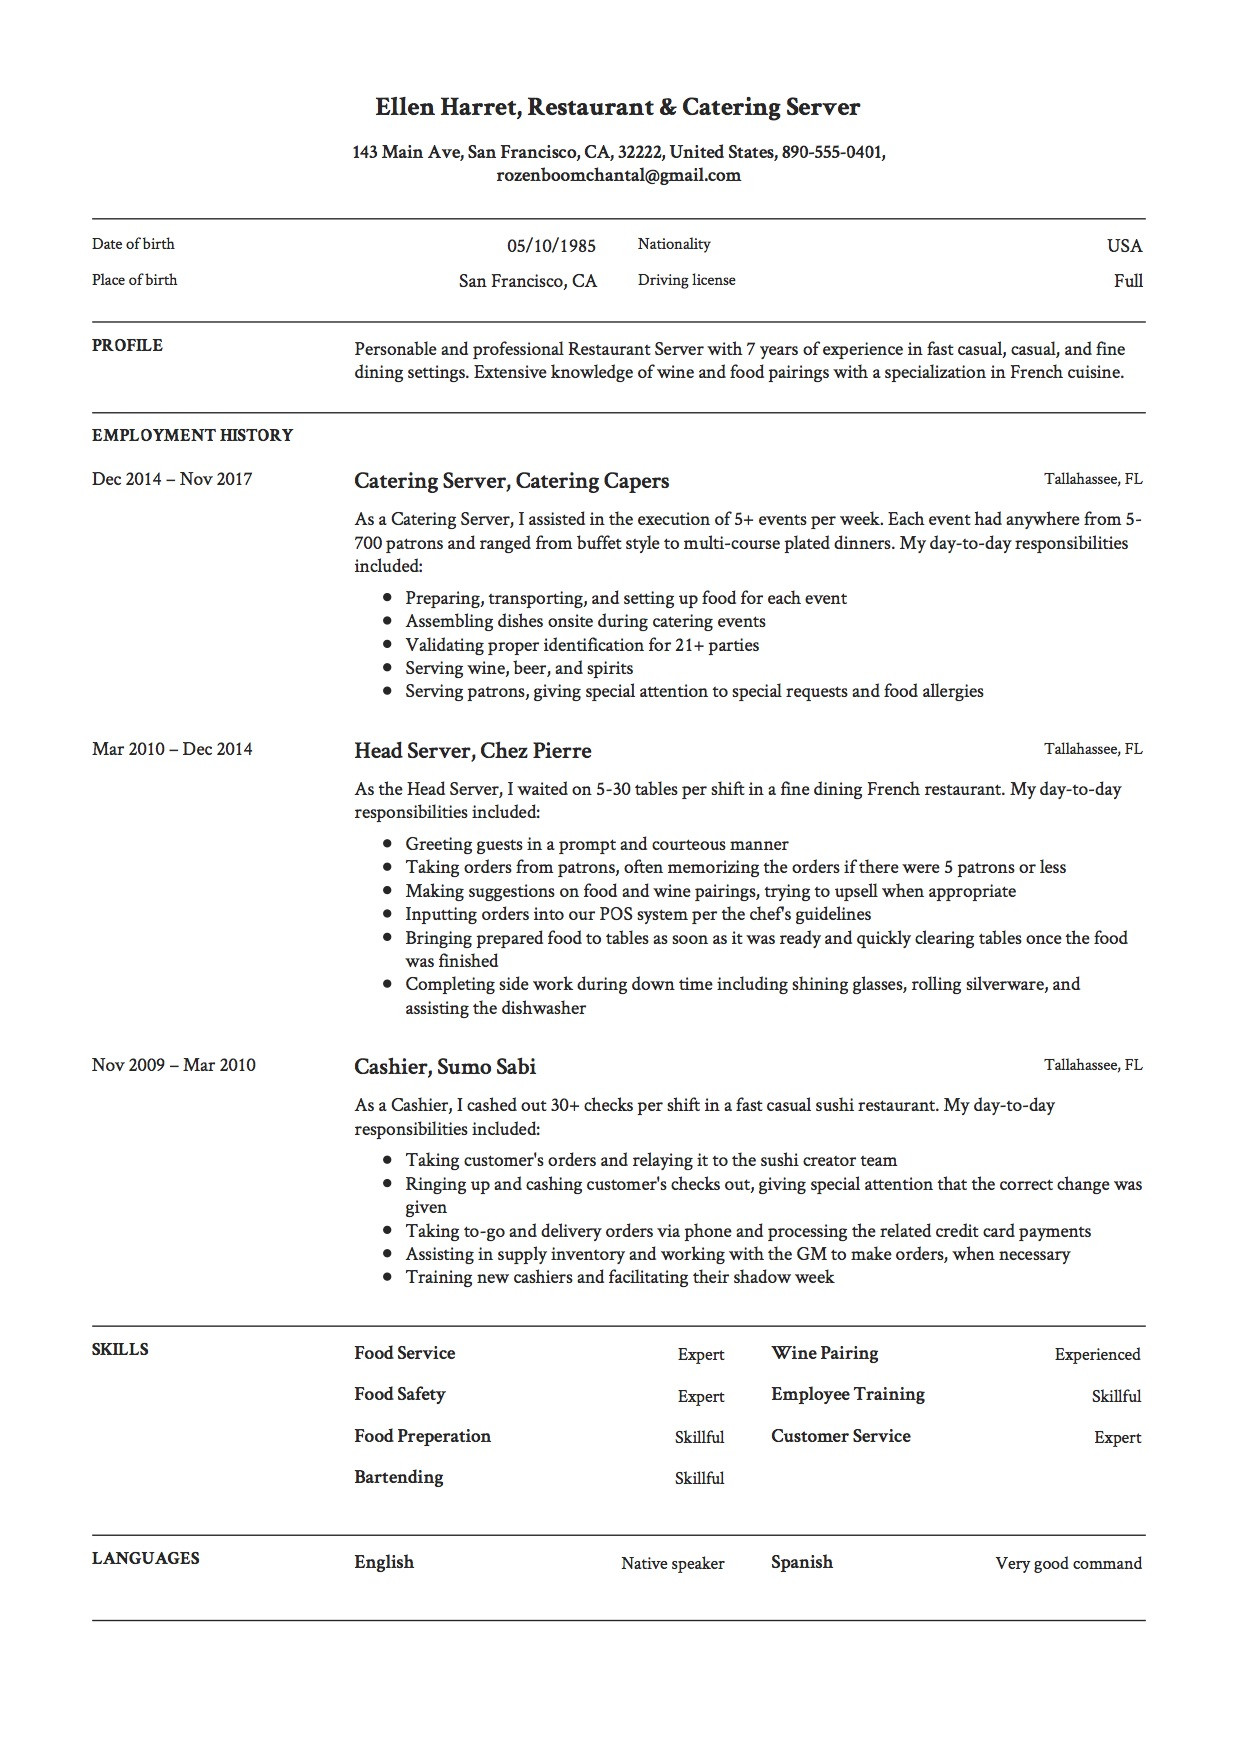 Sample Of Resume for Restaurant Server Server Resume & Writing Guide   17 Examples (free Downloads) 2020